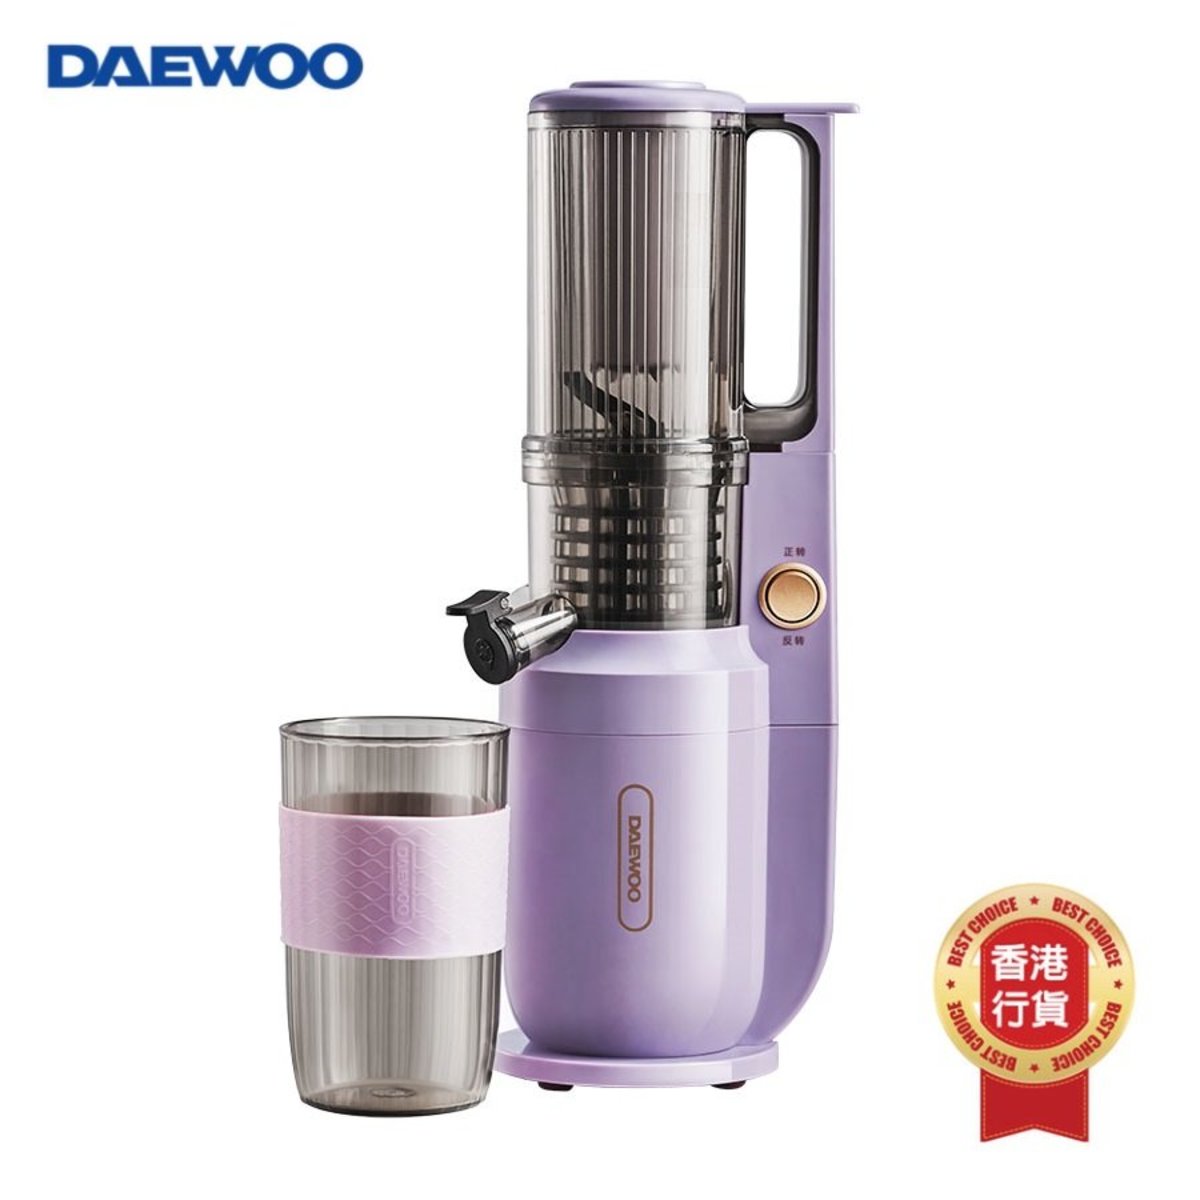 DAEWOO - Daewoo juicer | slow grinder | juicer DY-BM03